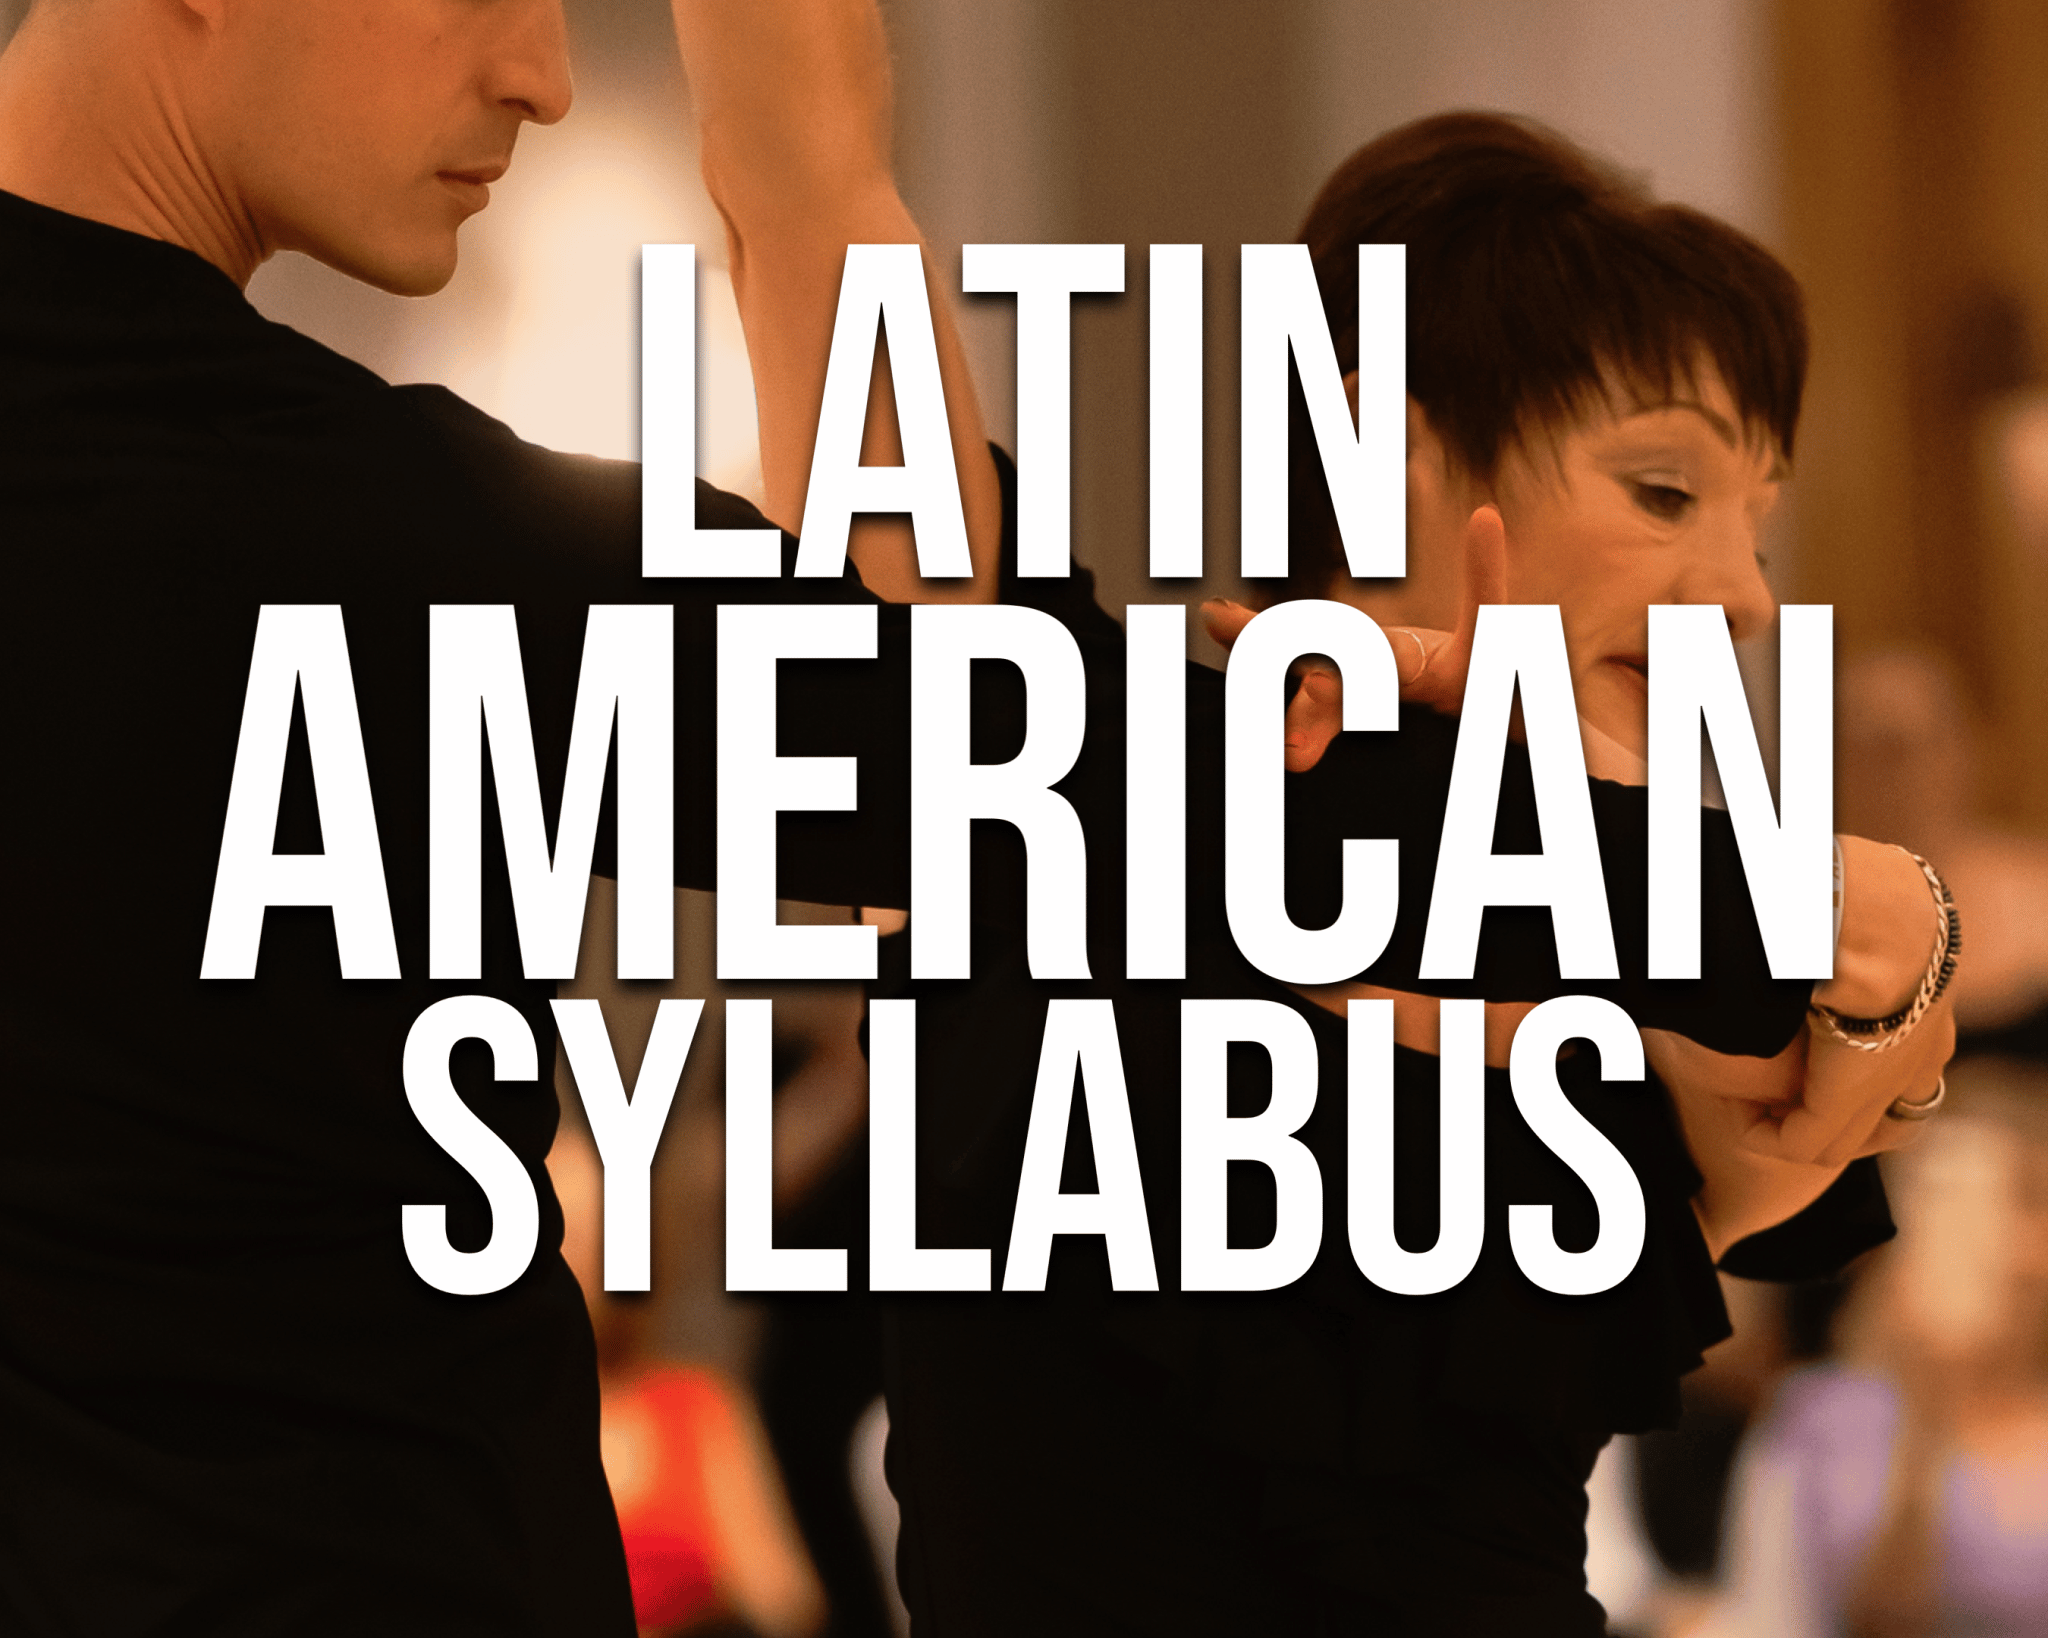 Latin American Technique Book and Syllabus